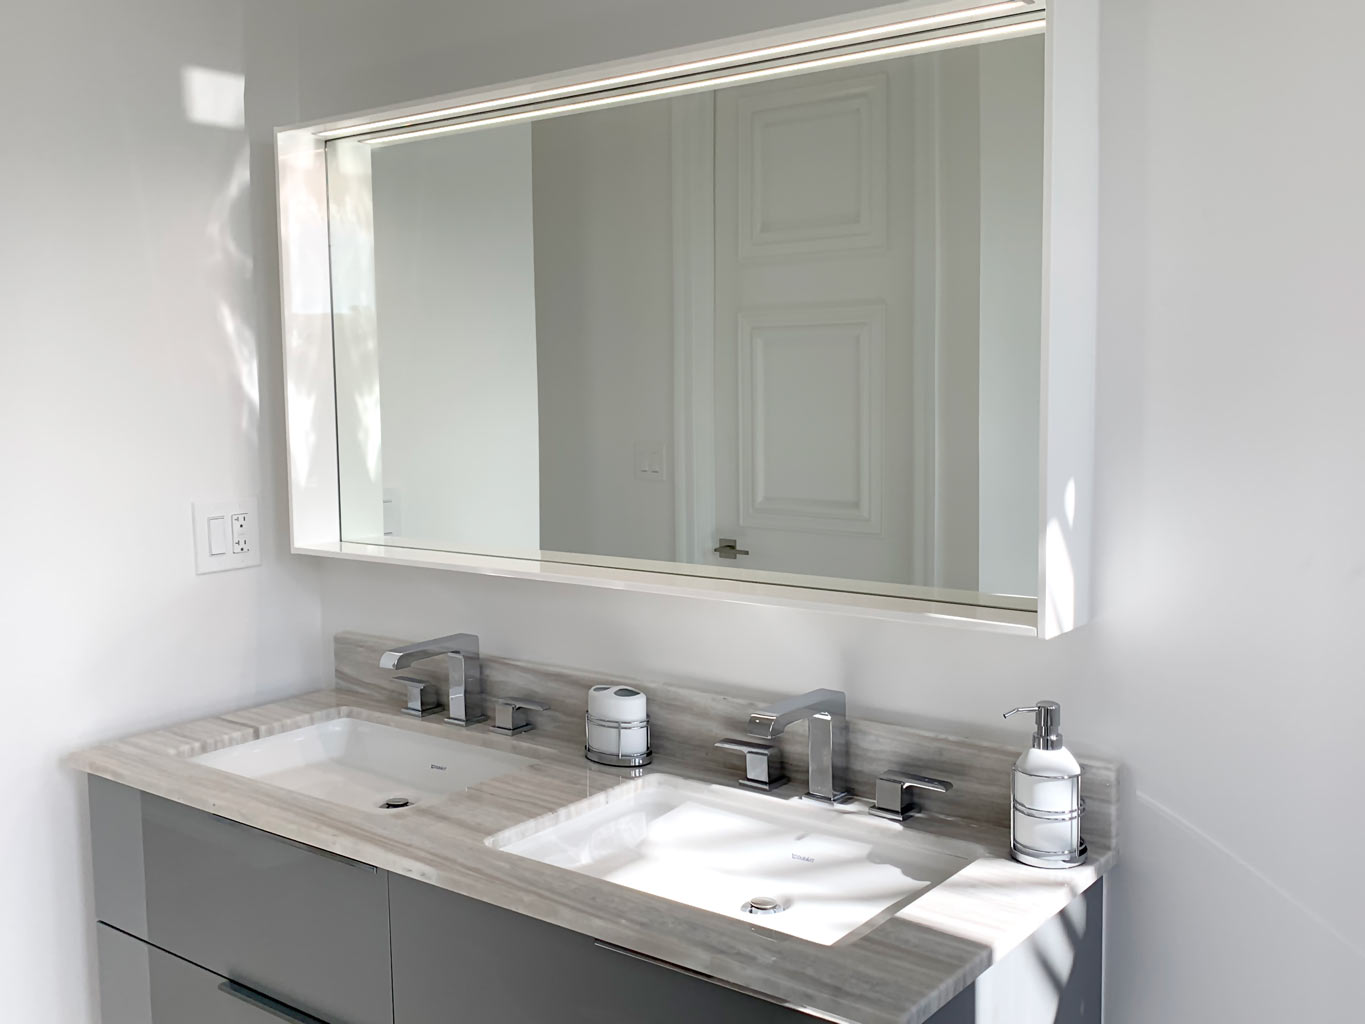 New double vanity with grey granite counter top